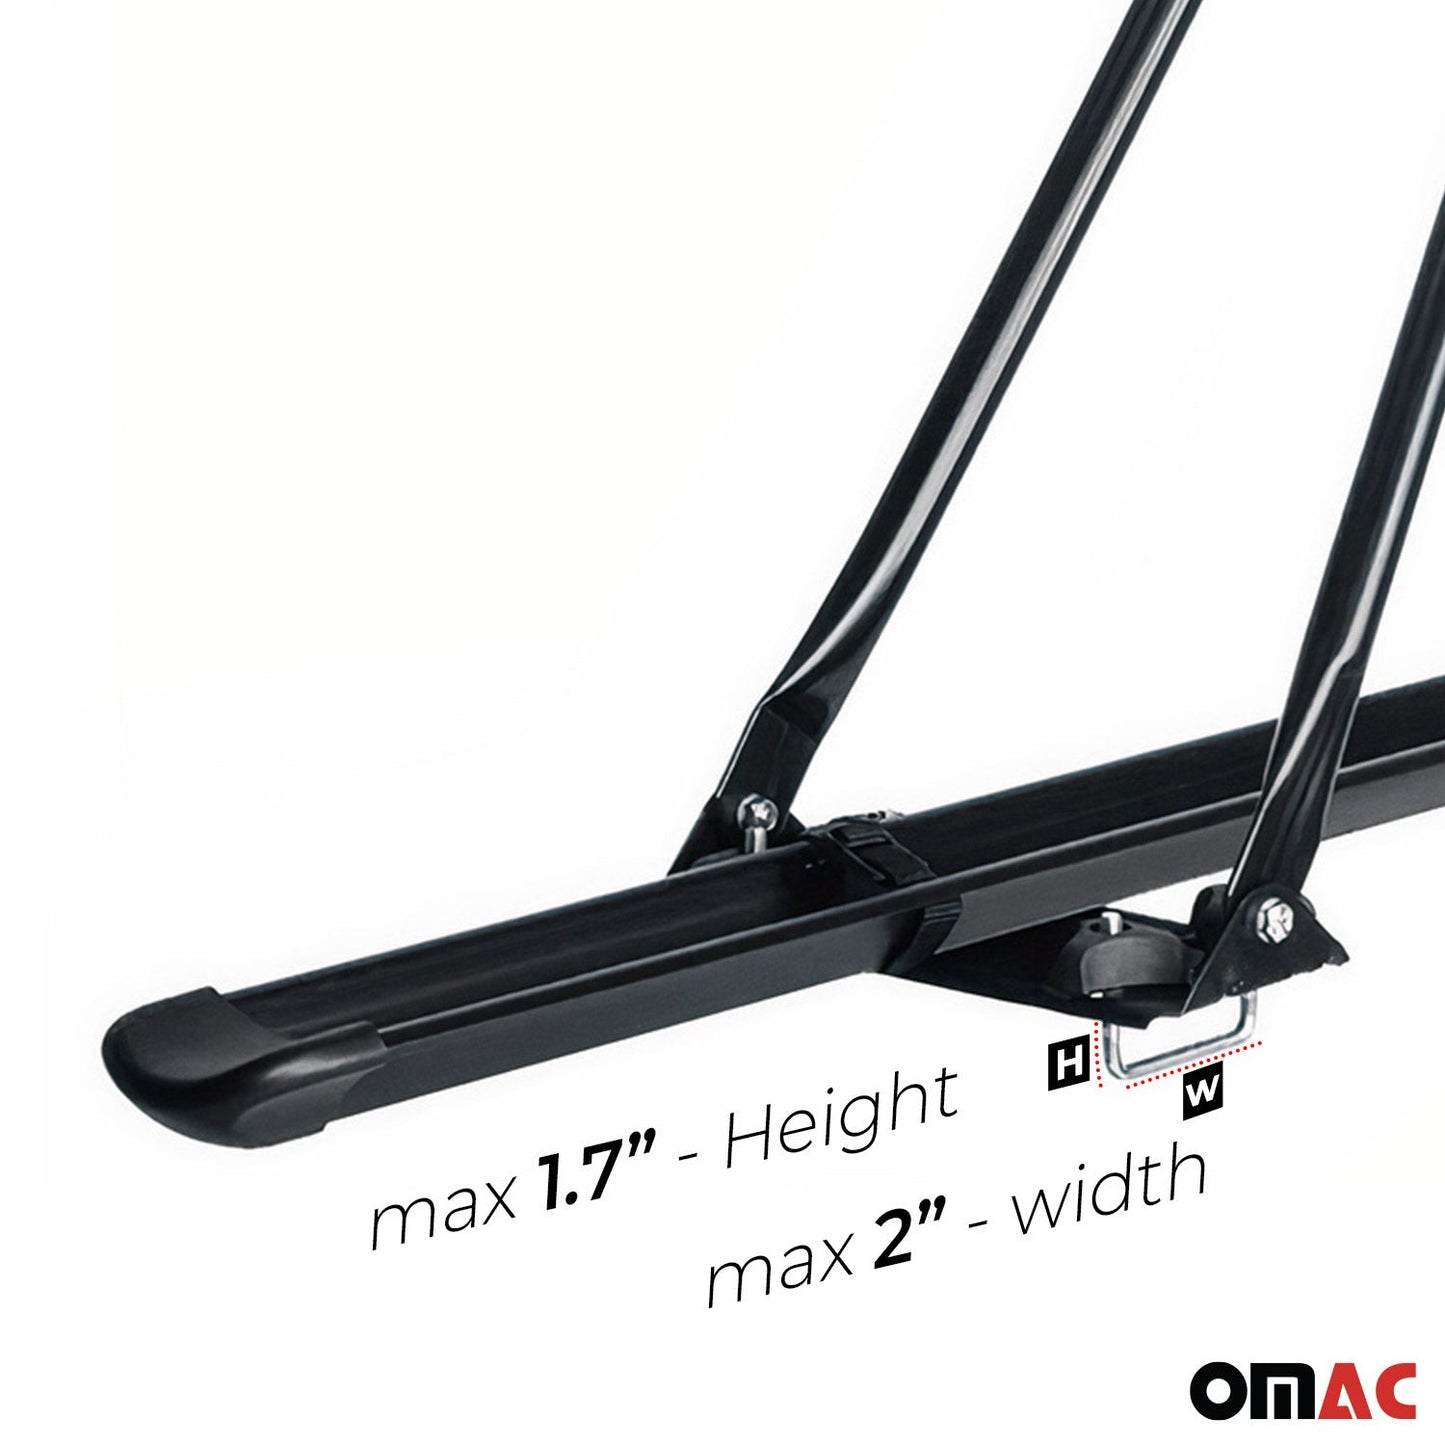 OMAC Bike Rack Carrier Roof Racks Set fits VW Touareg 2004-2010 Black 3x U020758